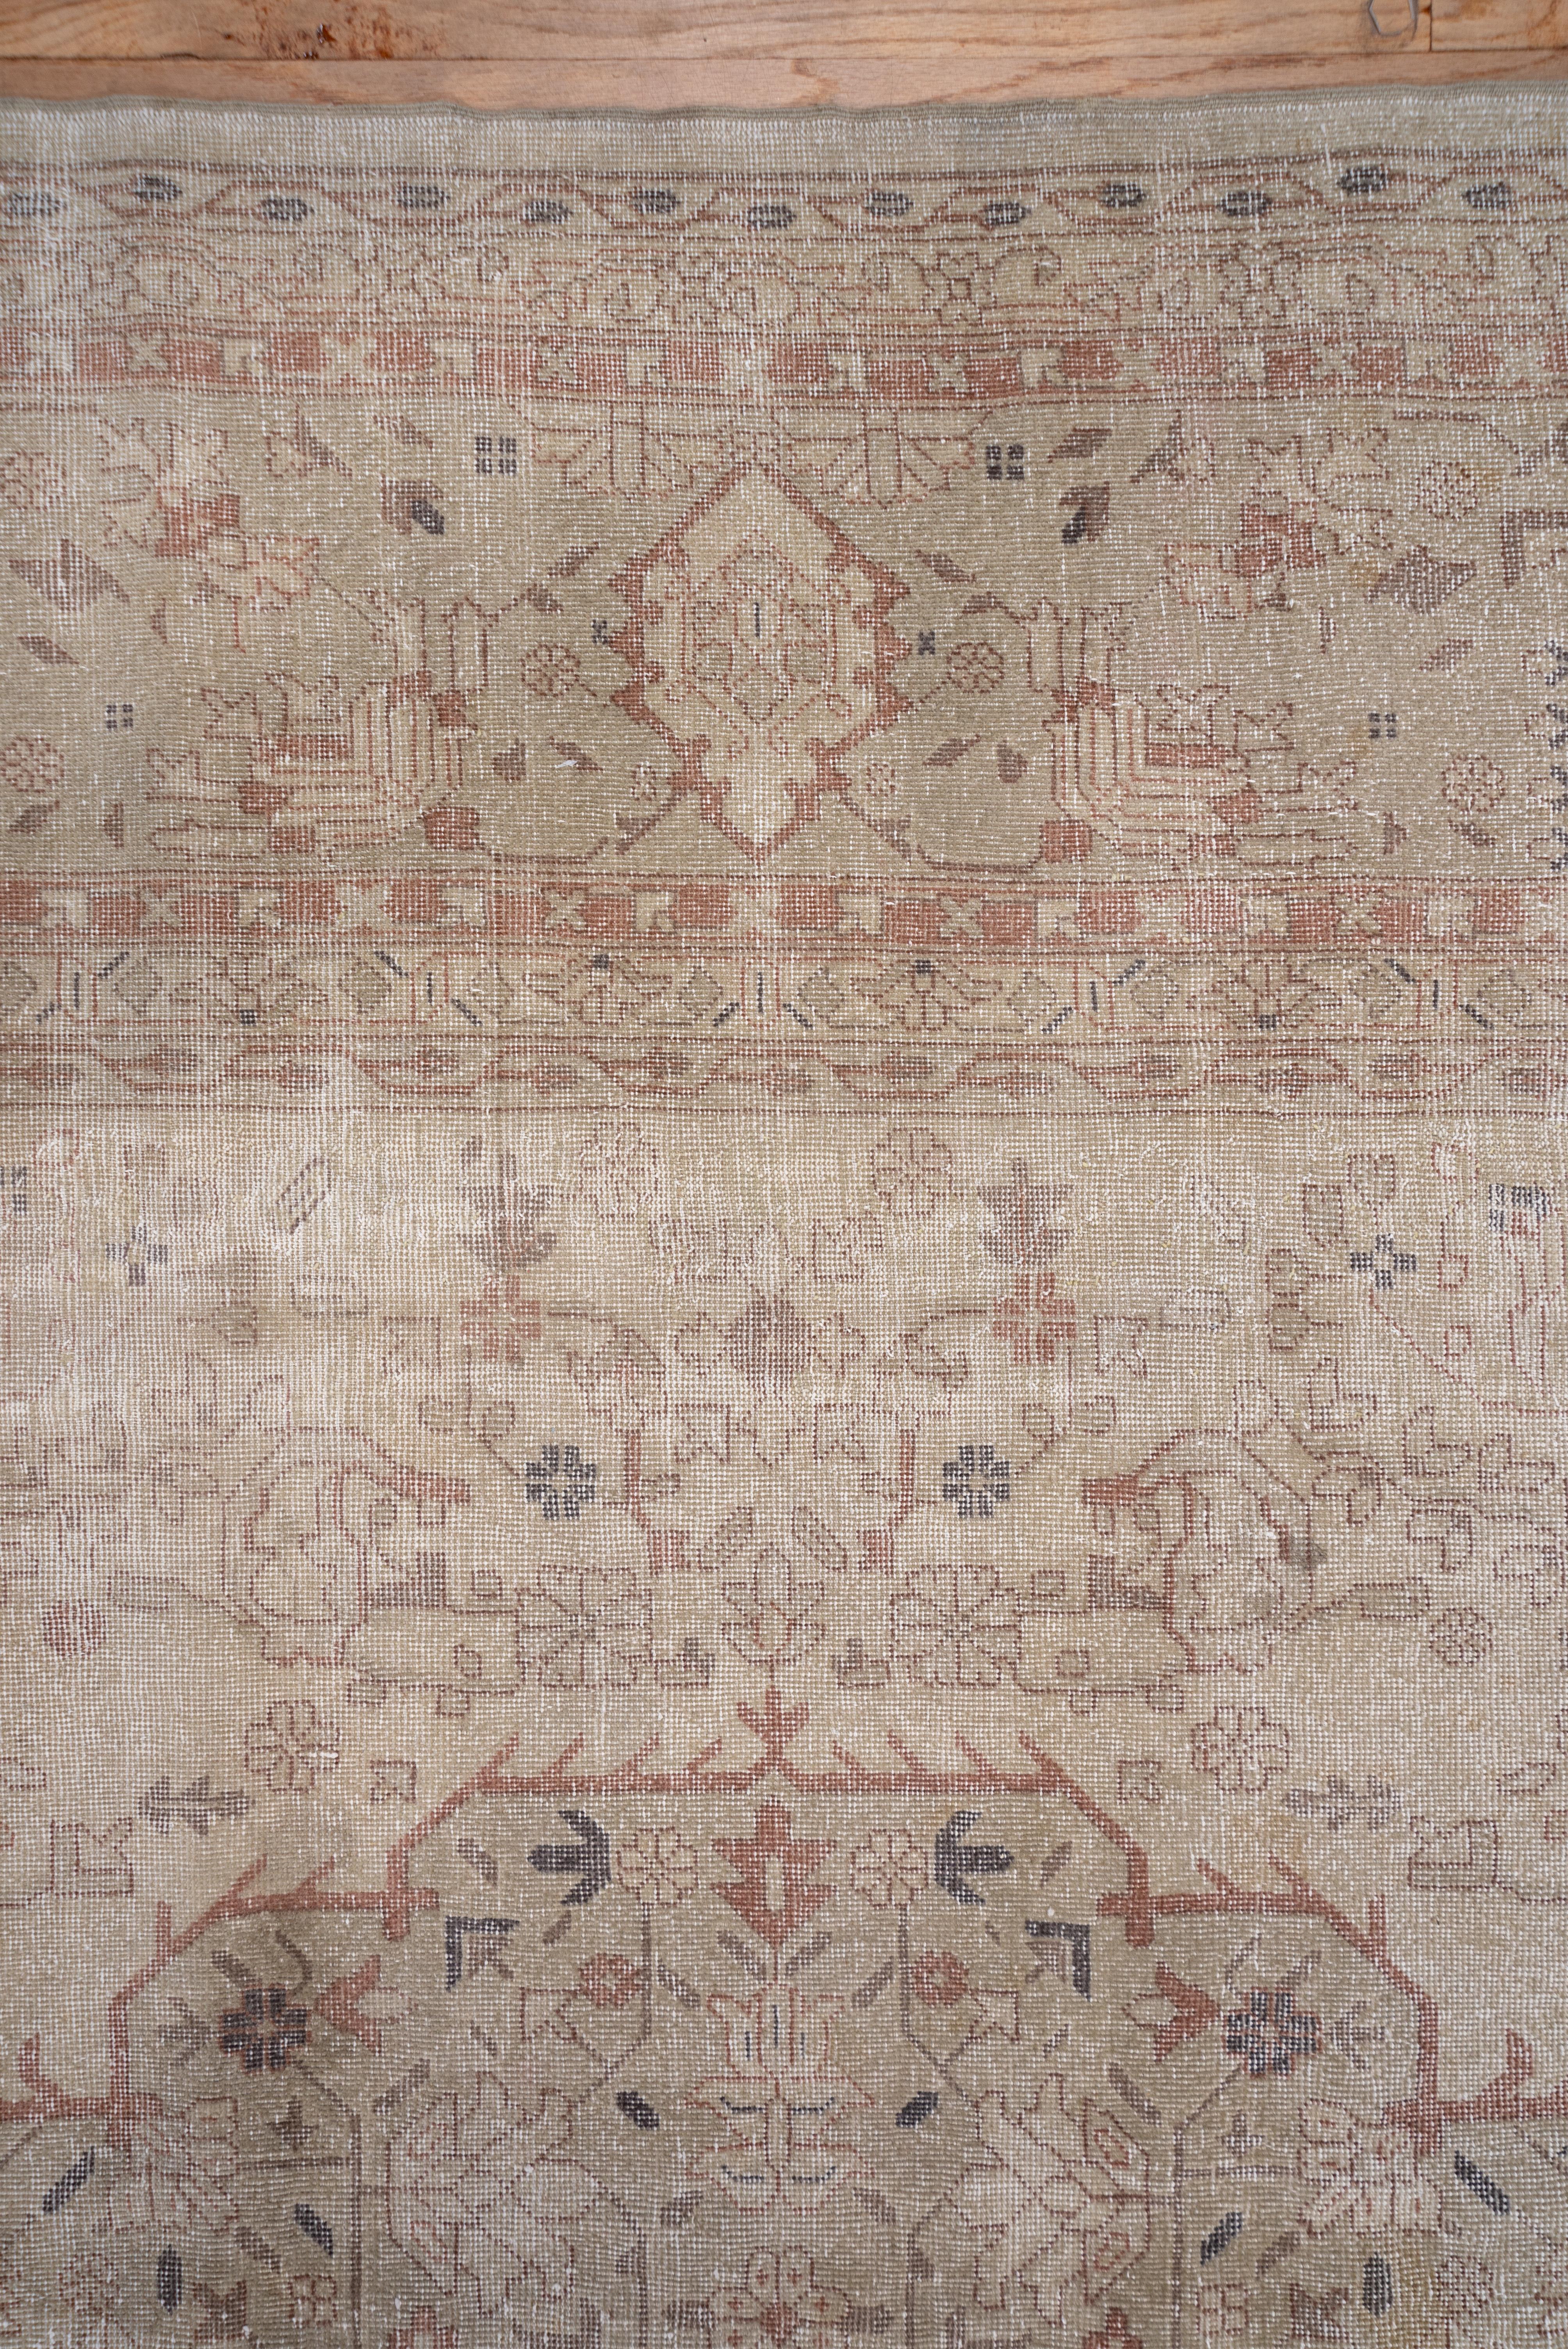 Turkish Subdued Antique Sivas Carpet For Sale